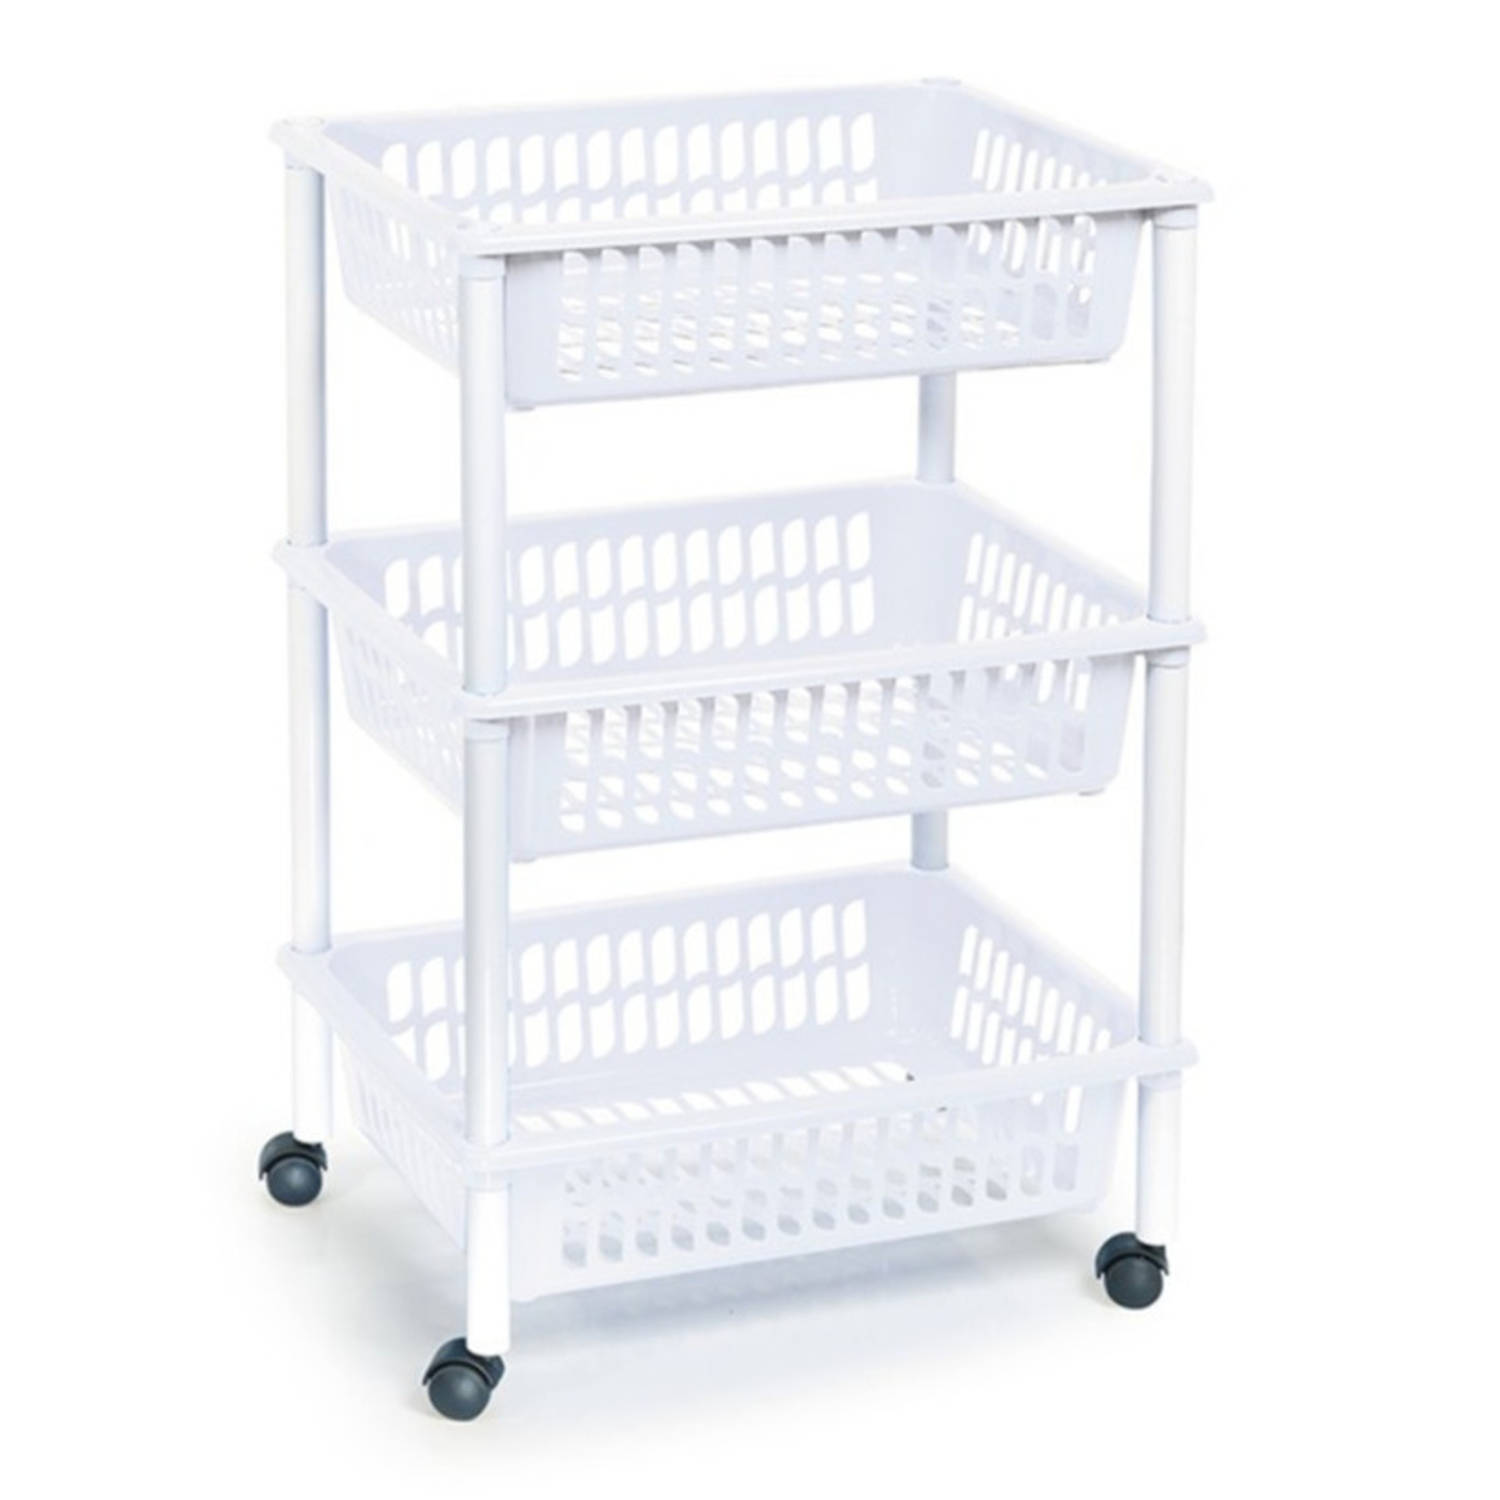 Opberg trolley/roltafel/organizer met 3 manden 40 x 30 x 61,5 cm wit/wit - Etagewagentje/karretje met opbergkratten